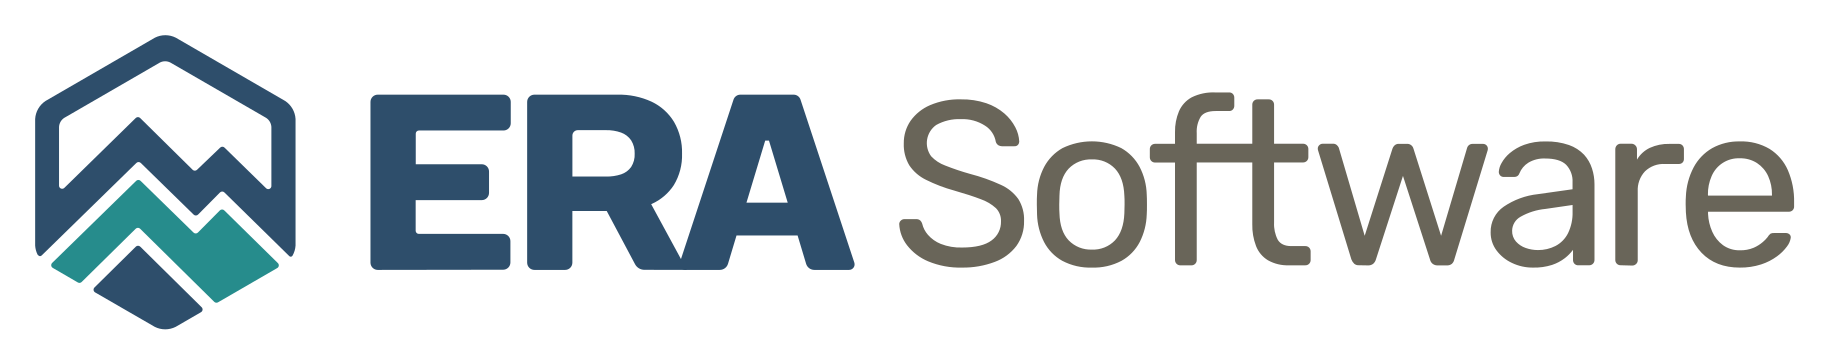 Era Software logo